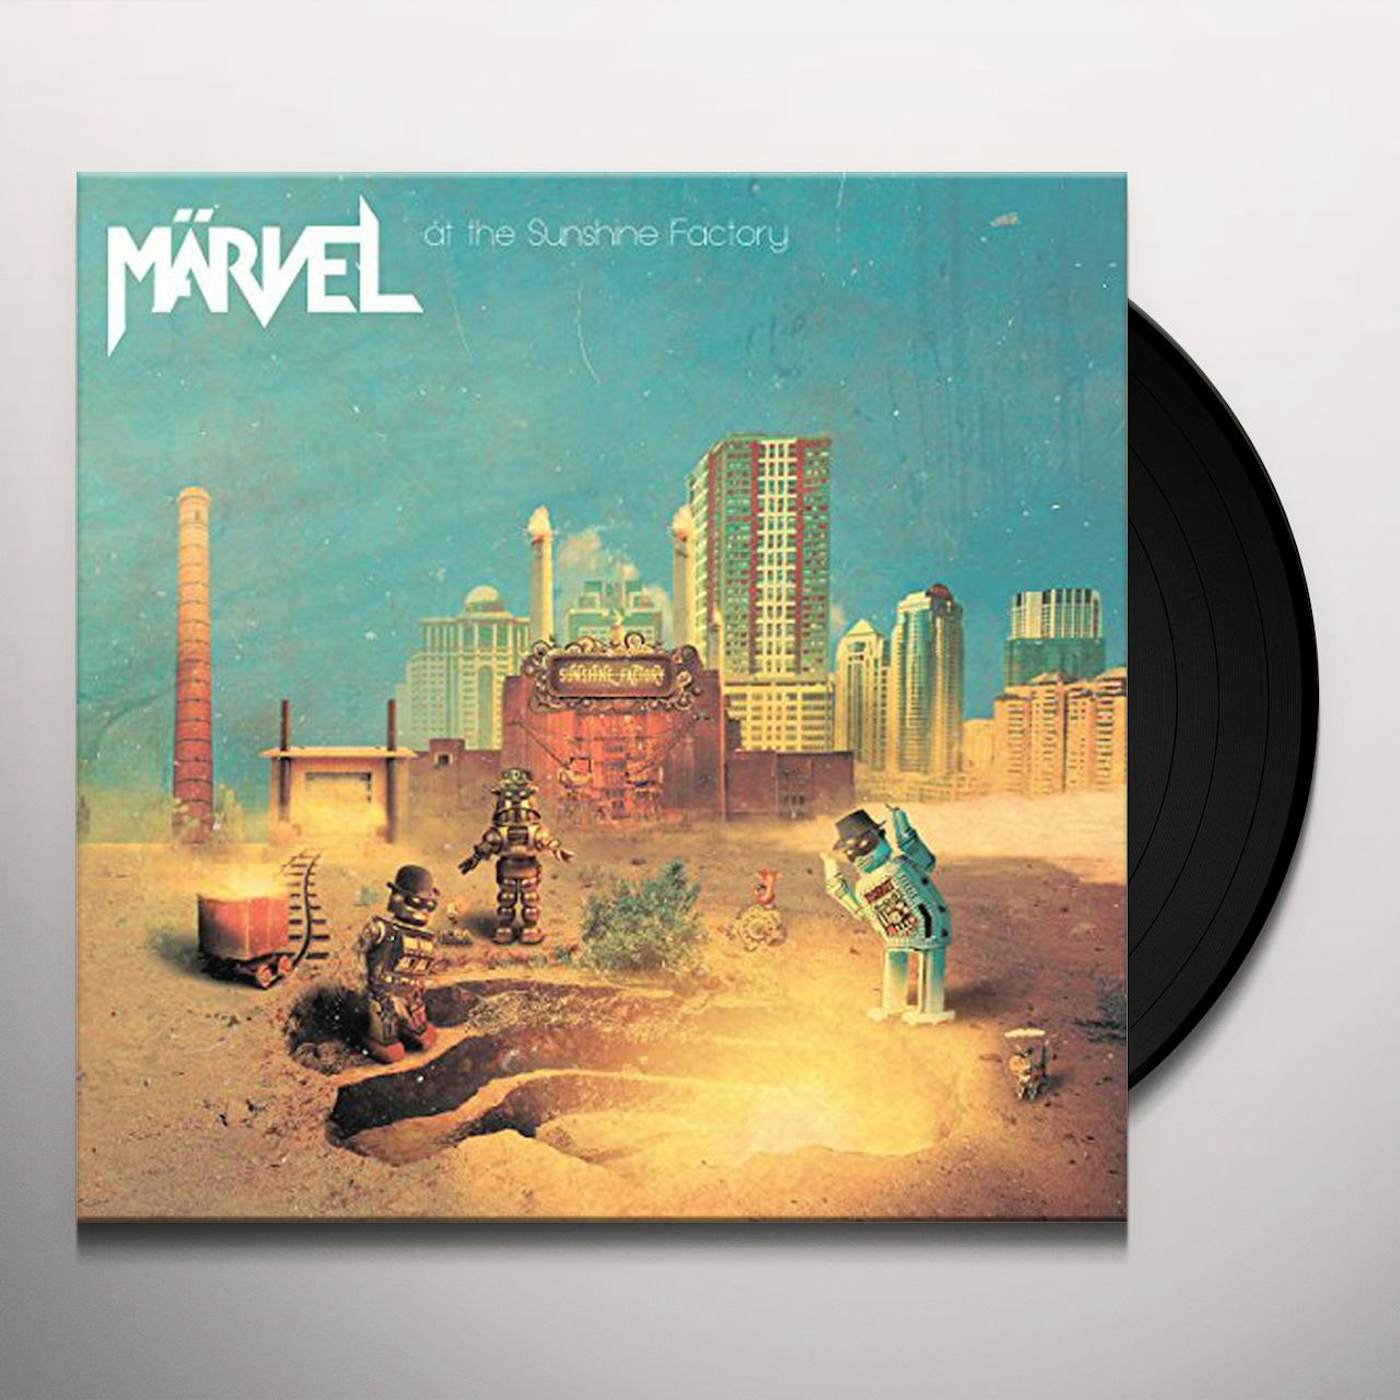 Marvel At The Sunshine Factory Vinyl Record